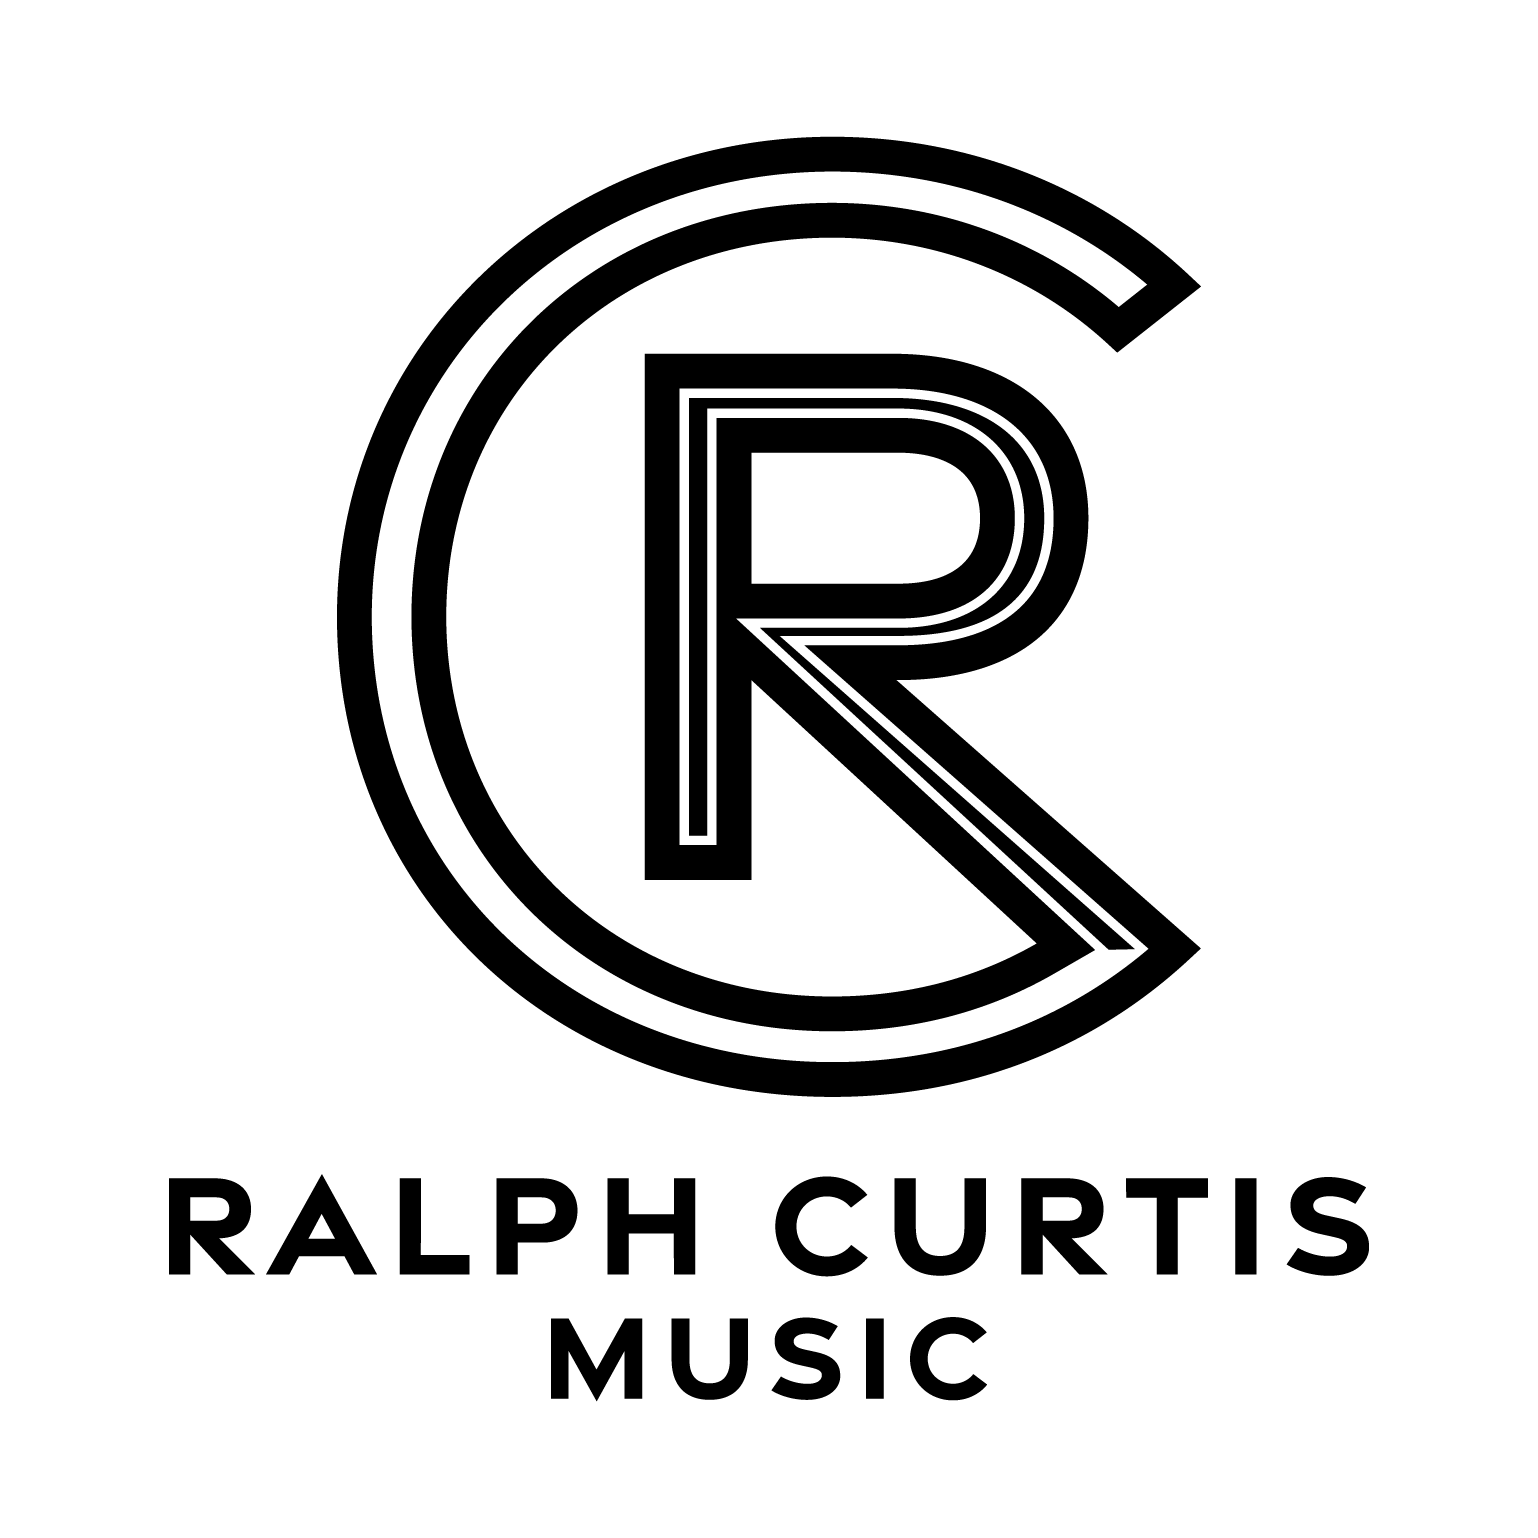 Ralph Curtis Music